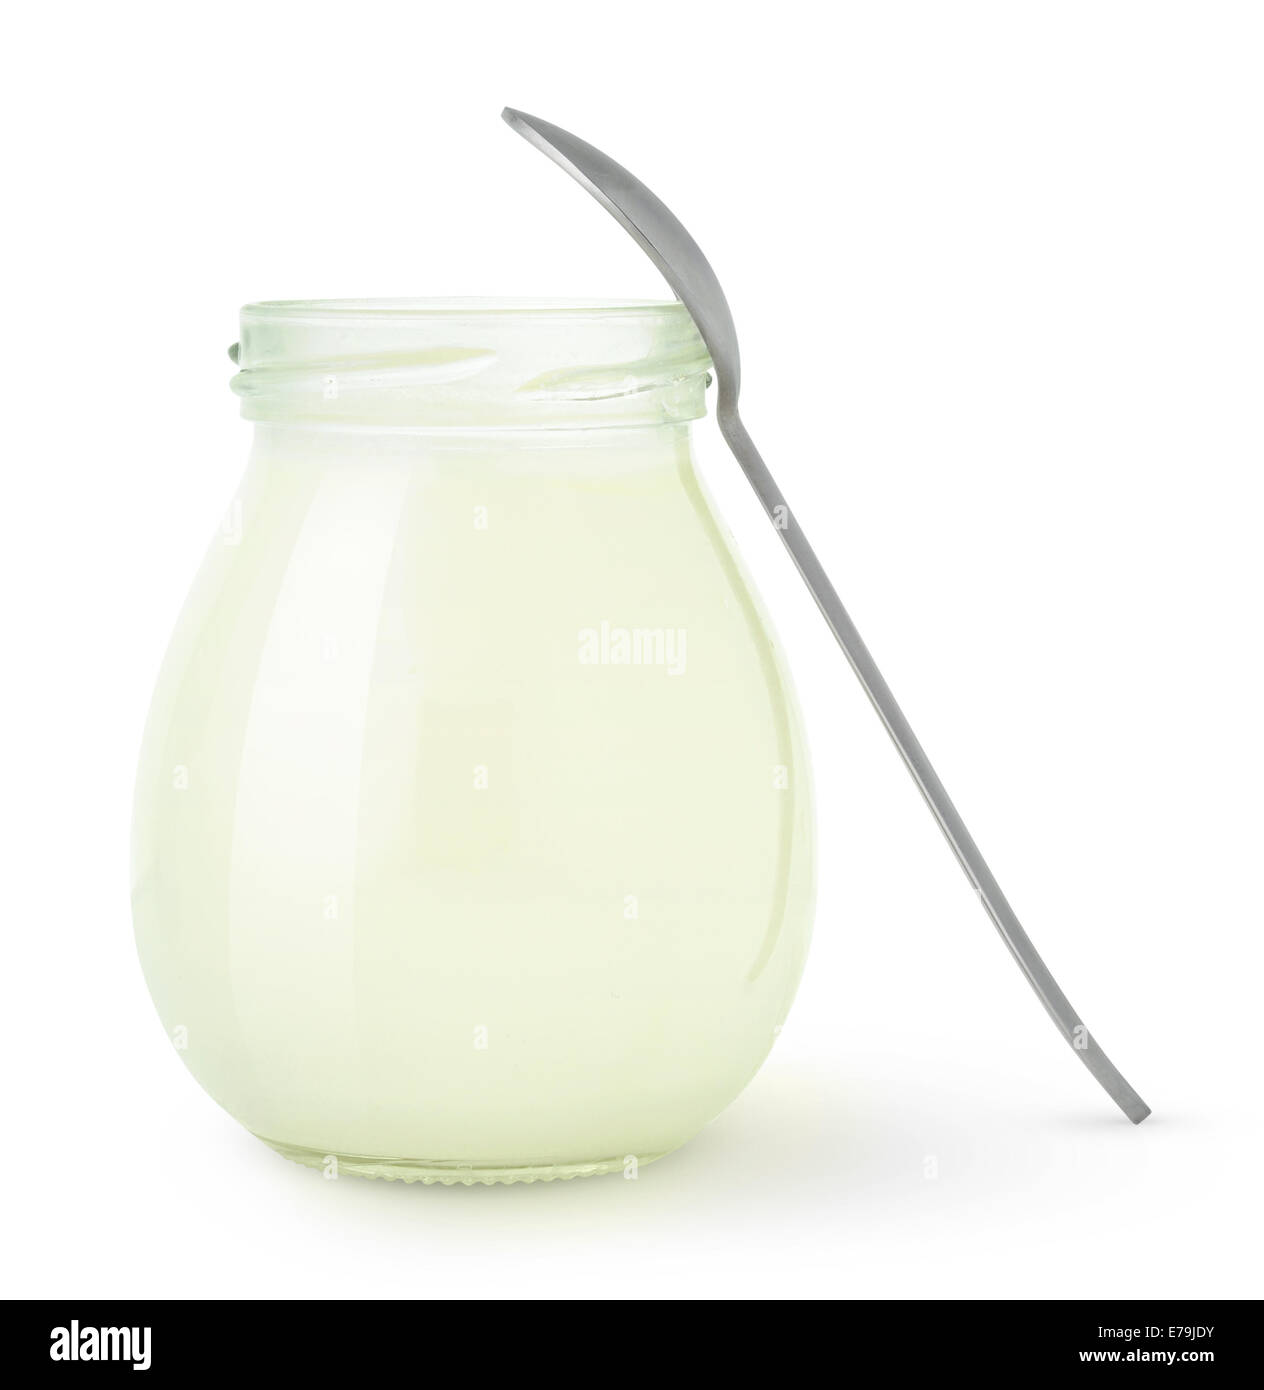 Jar of fresh yogurt on white background Stock Photo